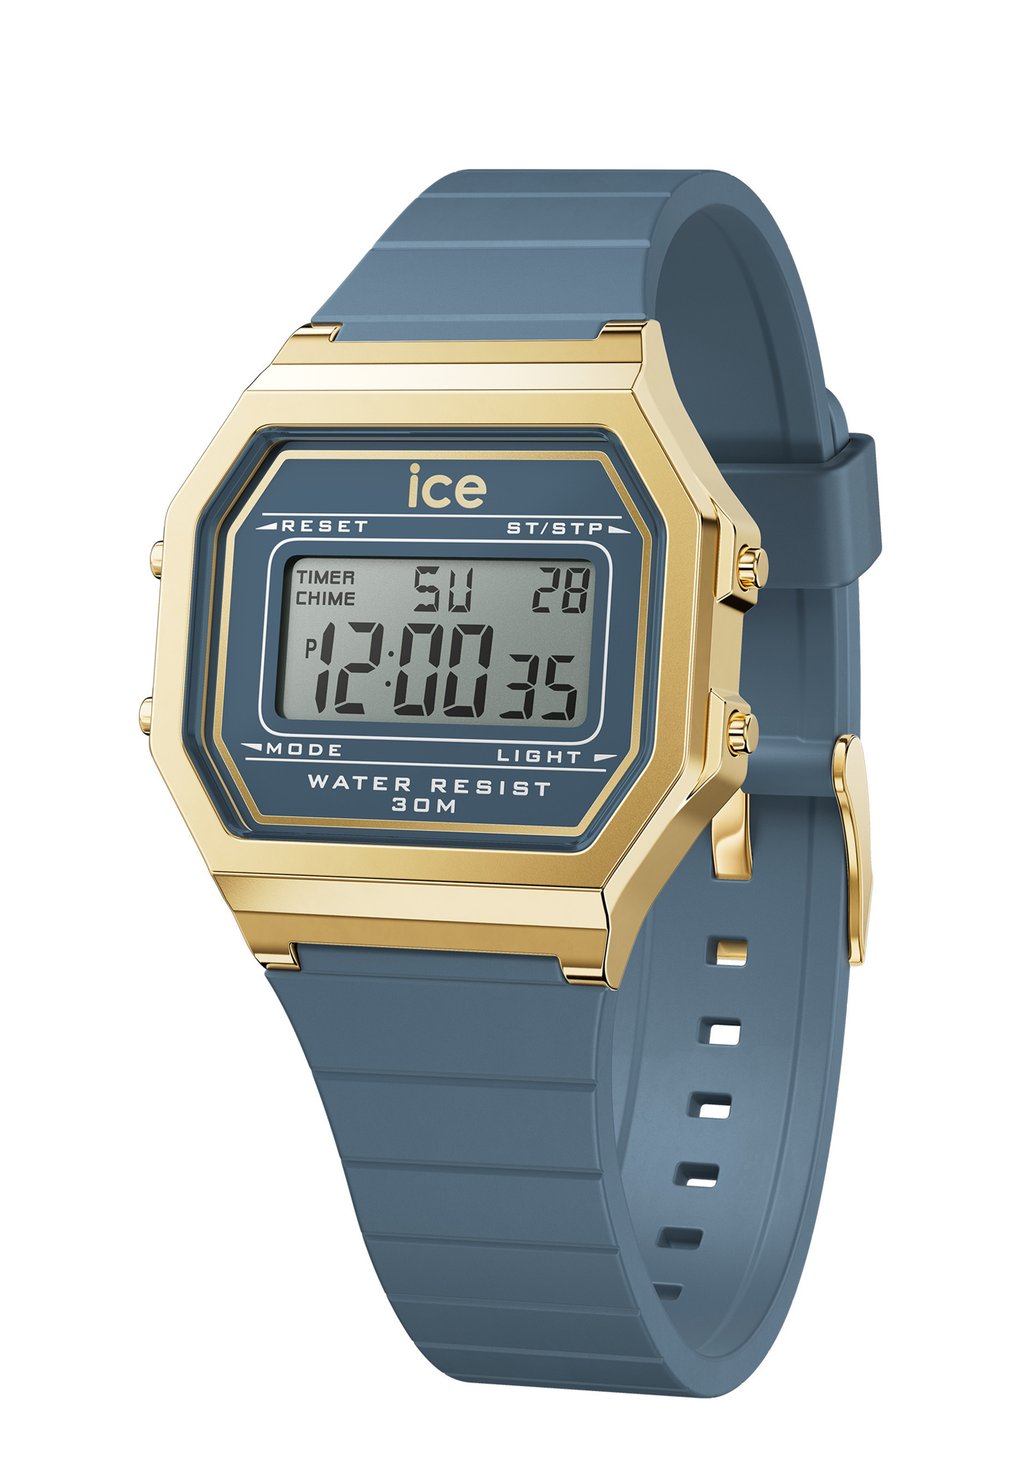 Цифровые часы DIGIT RETRO Ice-Watch, цвет midnight blue s цена и фото